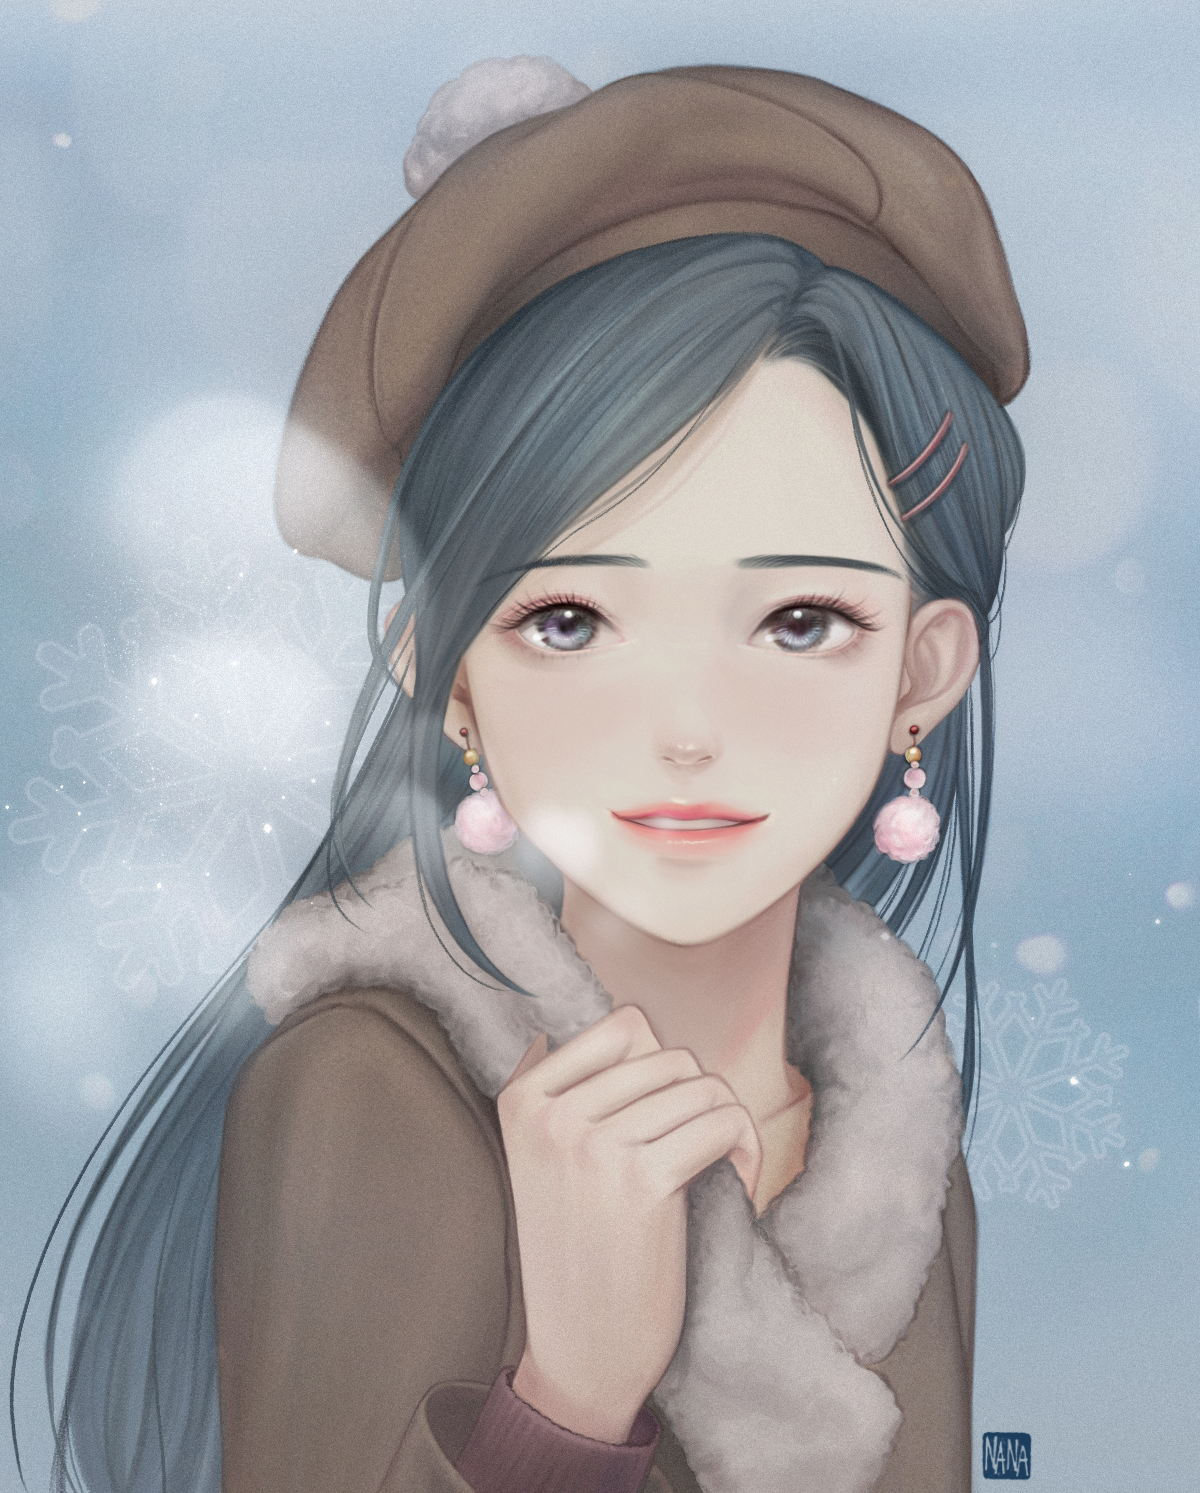 A winter day by NANA